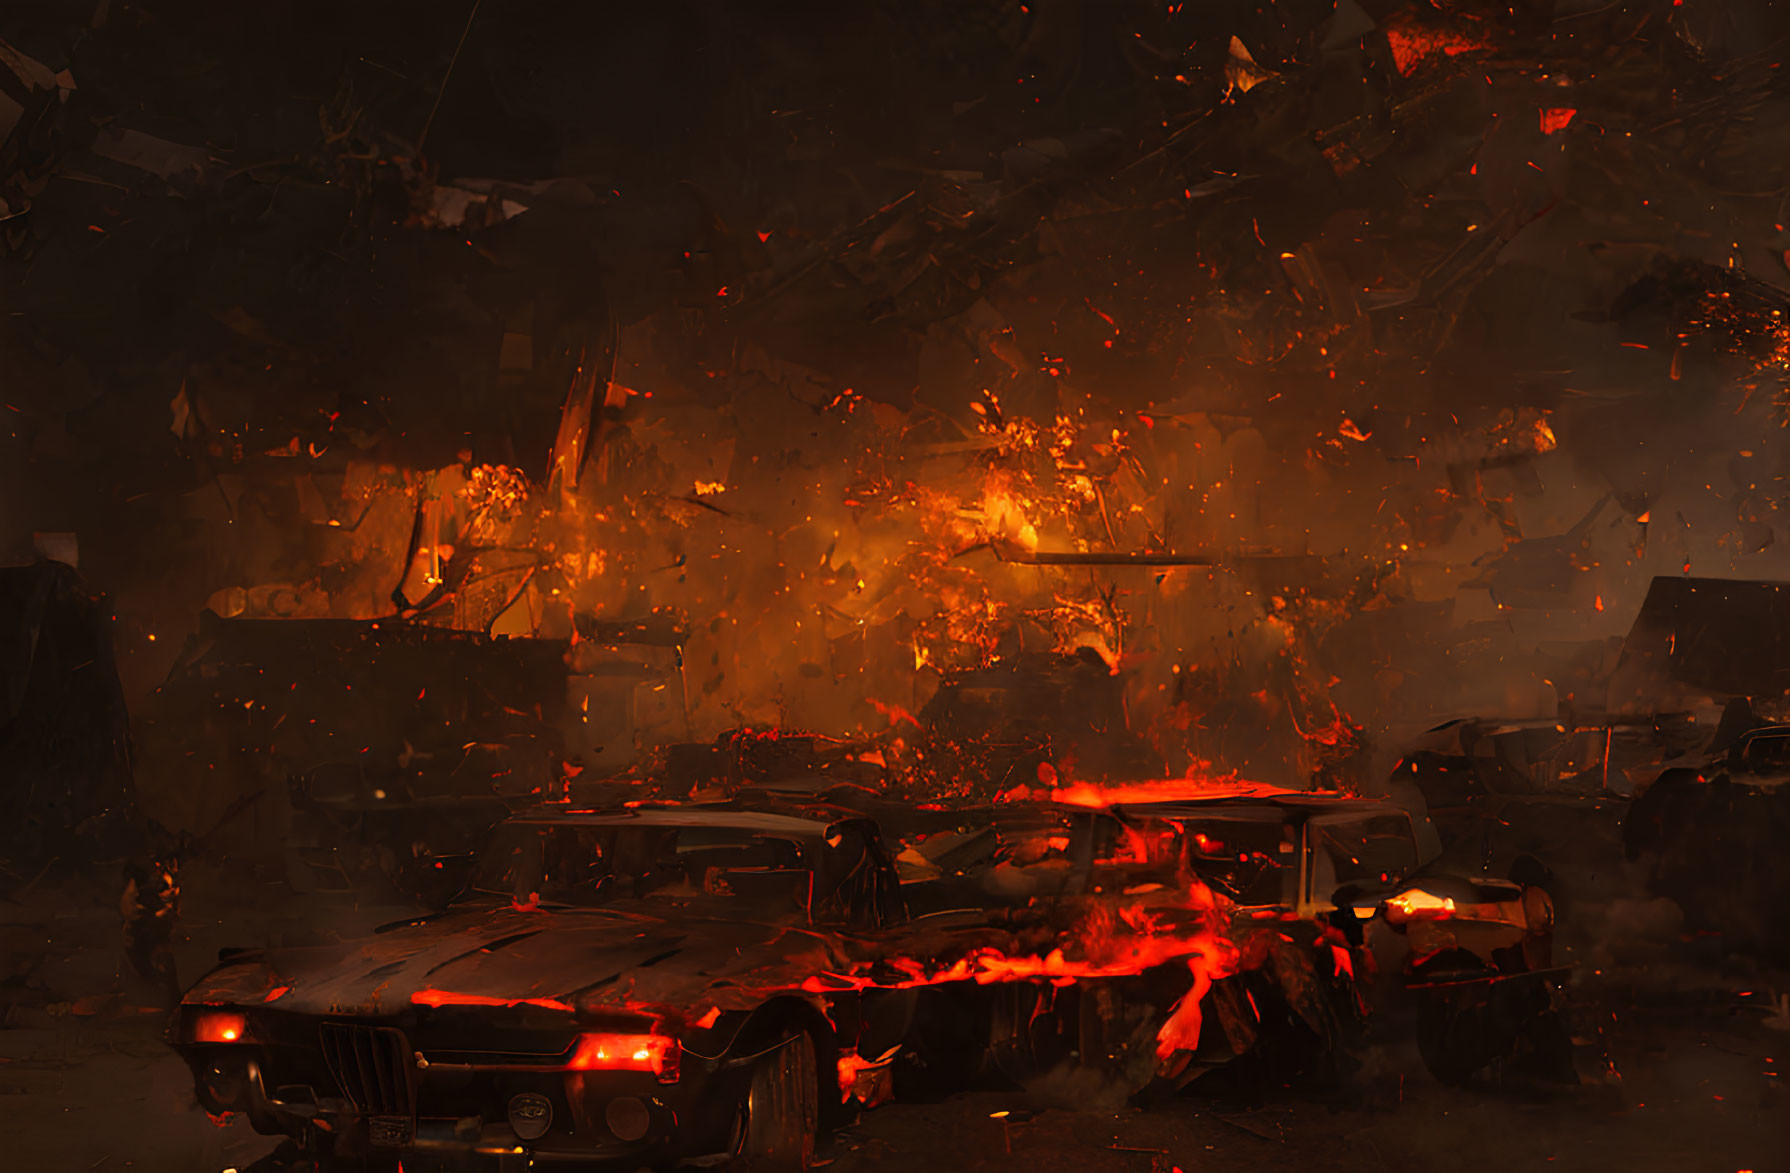 Apocalyptic Scene: Destroyed Cars, Flames, Smoke, Debris